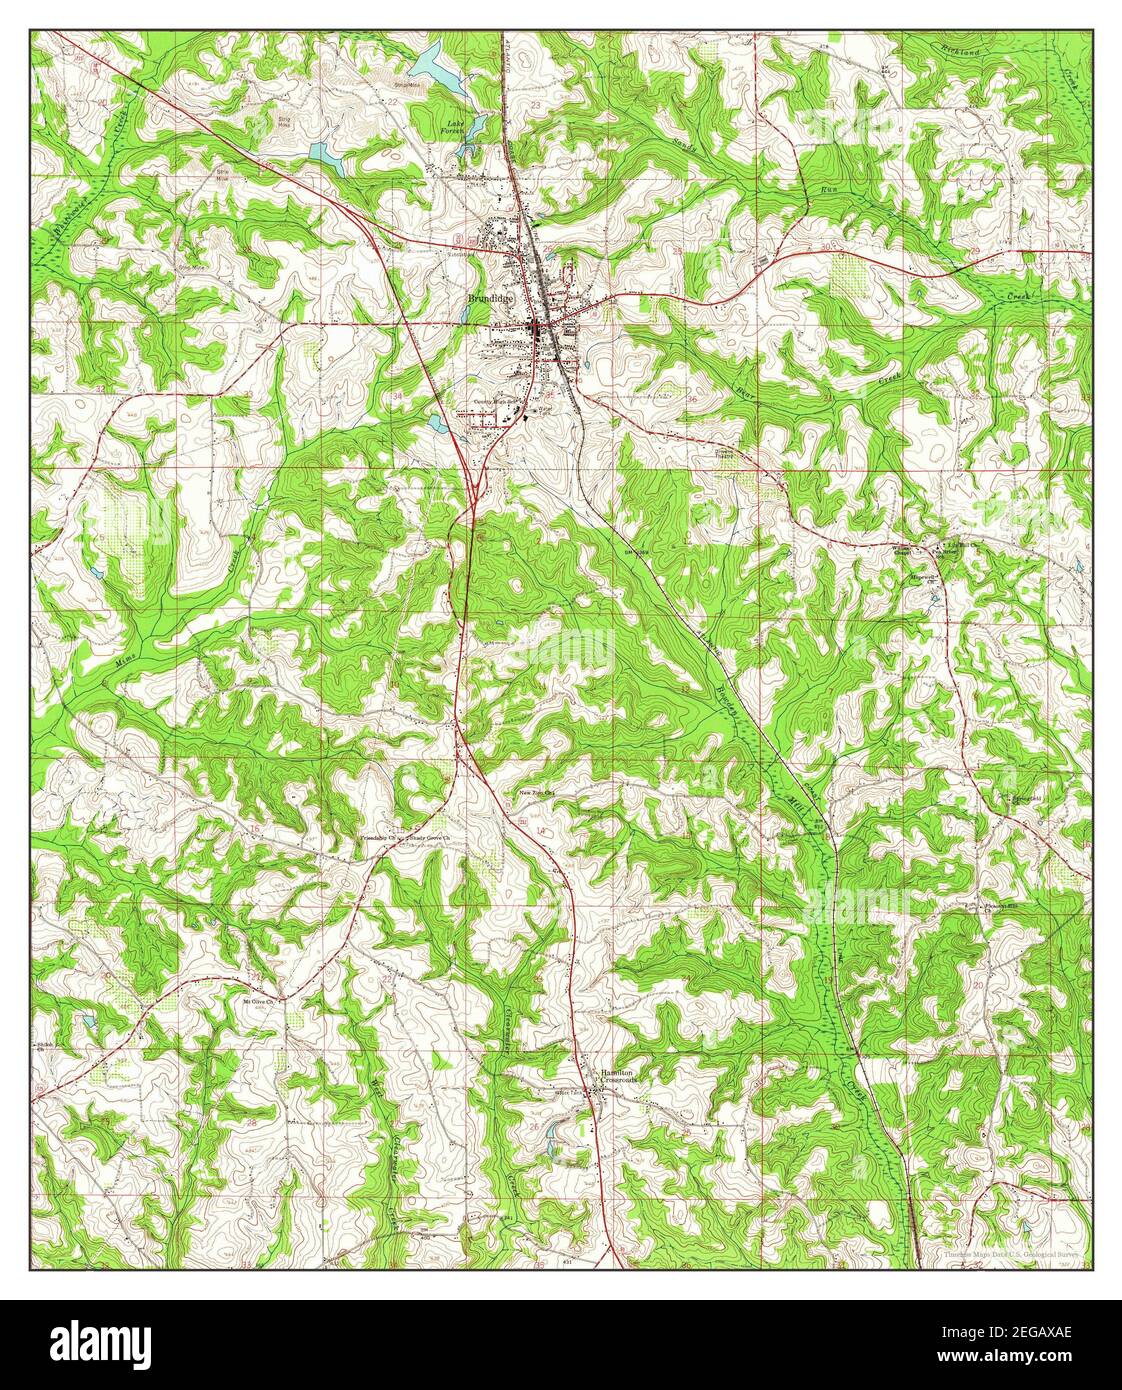 Brundidge, Alabama, map 1960, 1:24000, United States of America by Timeless Maps, data U.S. Geological Survey Stock Photo